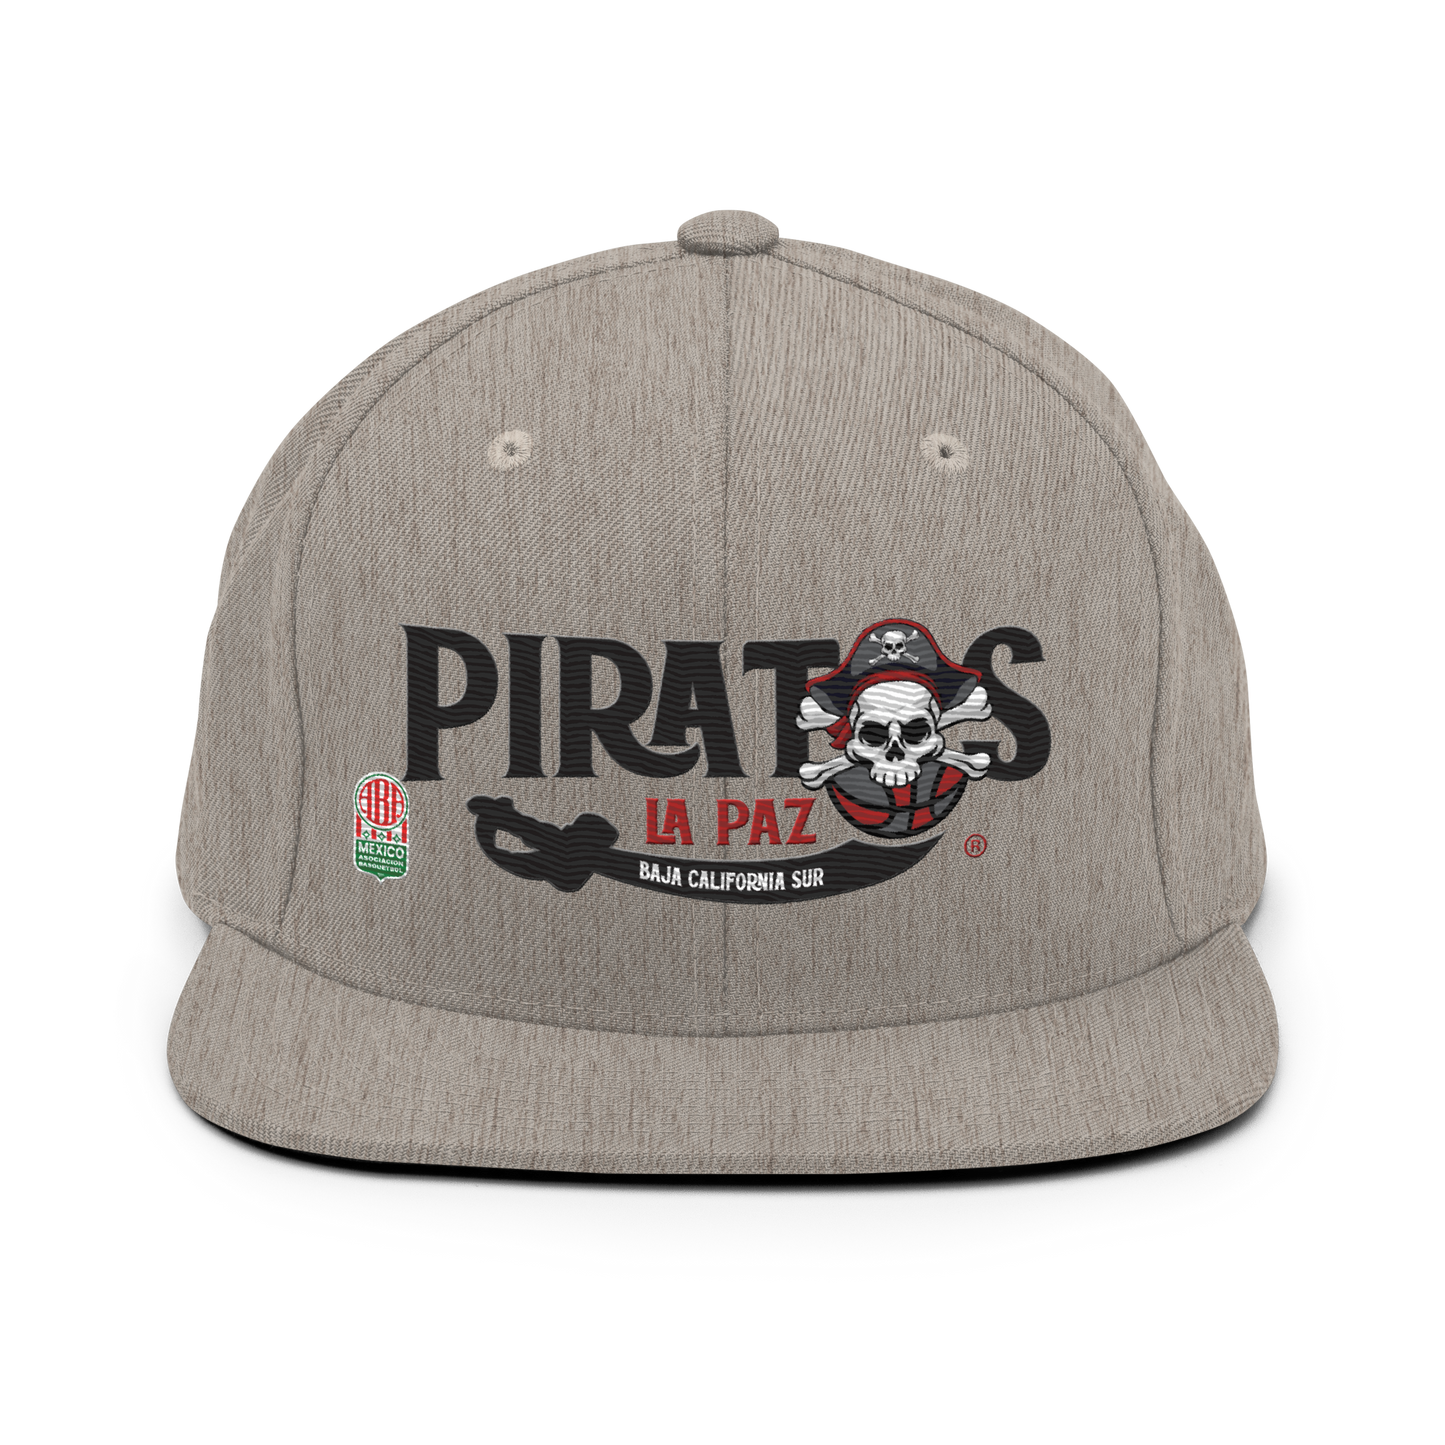 Piratas de la Paz Basketball Team Fan Hat